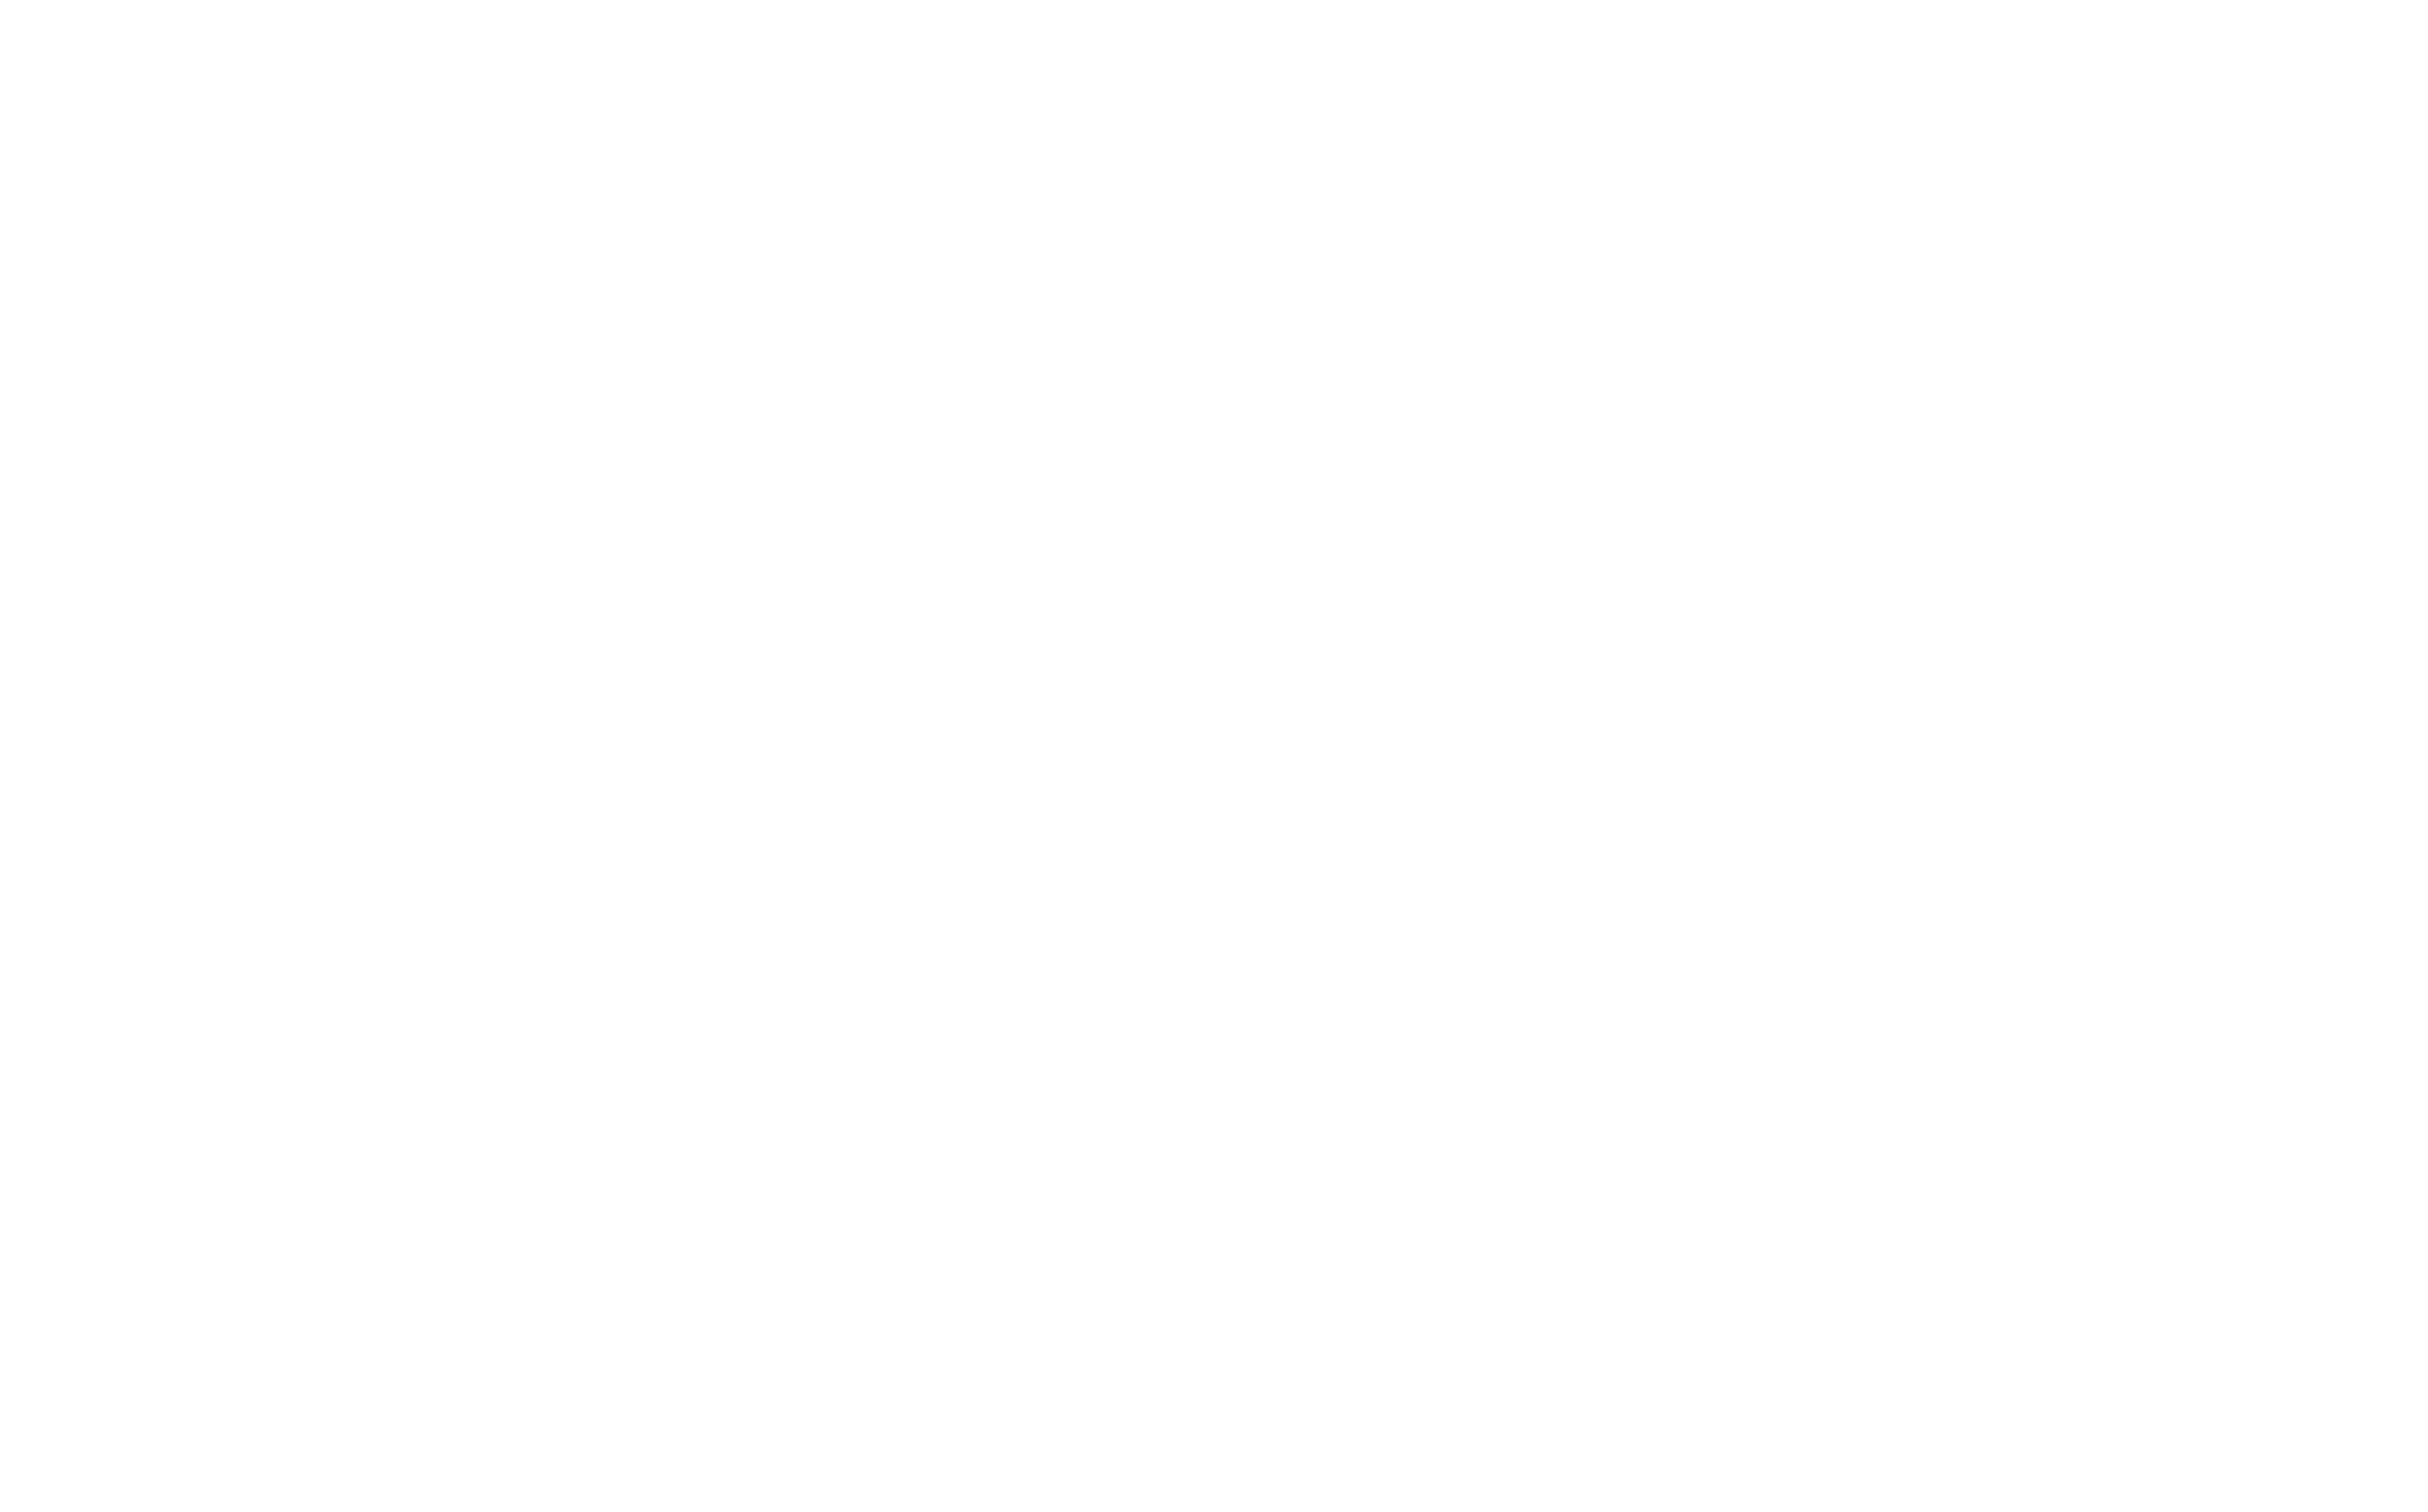 AMC+